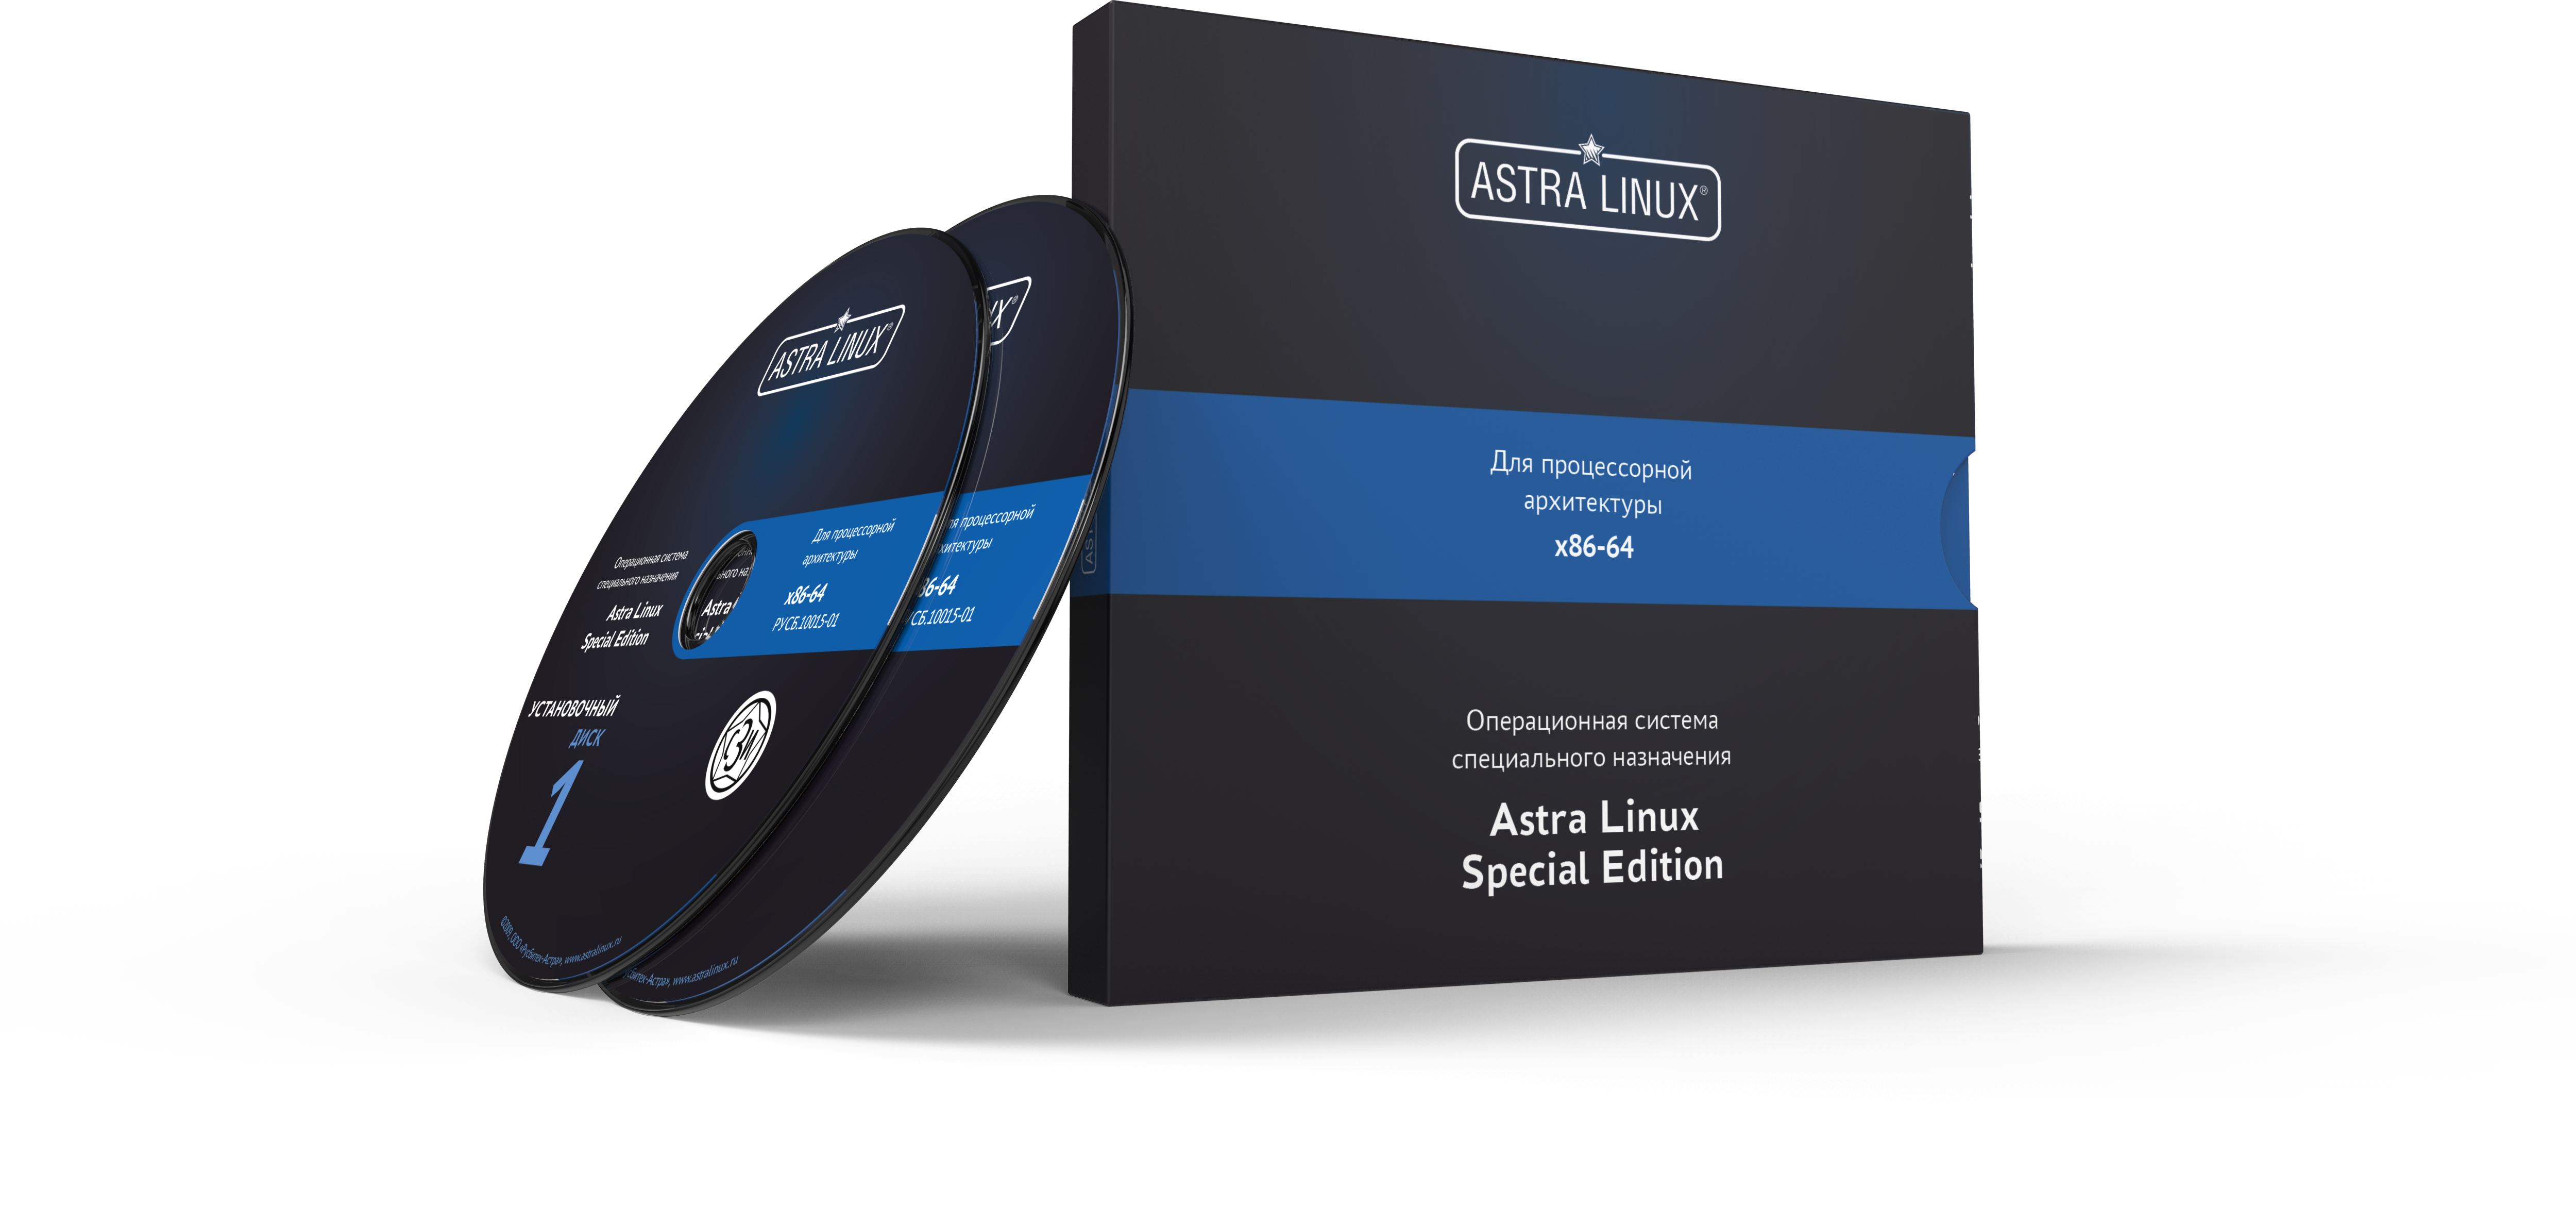 Astra Linux Special Edition 1.7 - Воронеж, "Усиленный", BOX, ФСТЭК, без огр. срока, ТП "Стандарт" на 36 мес.